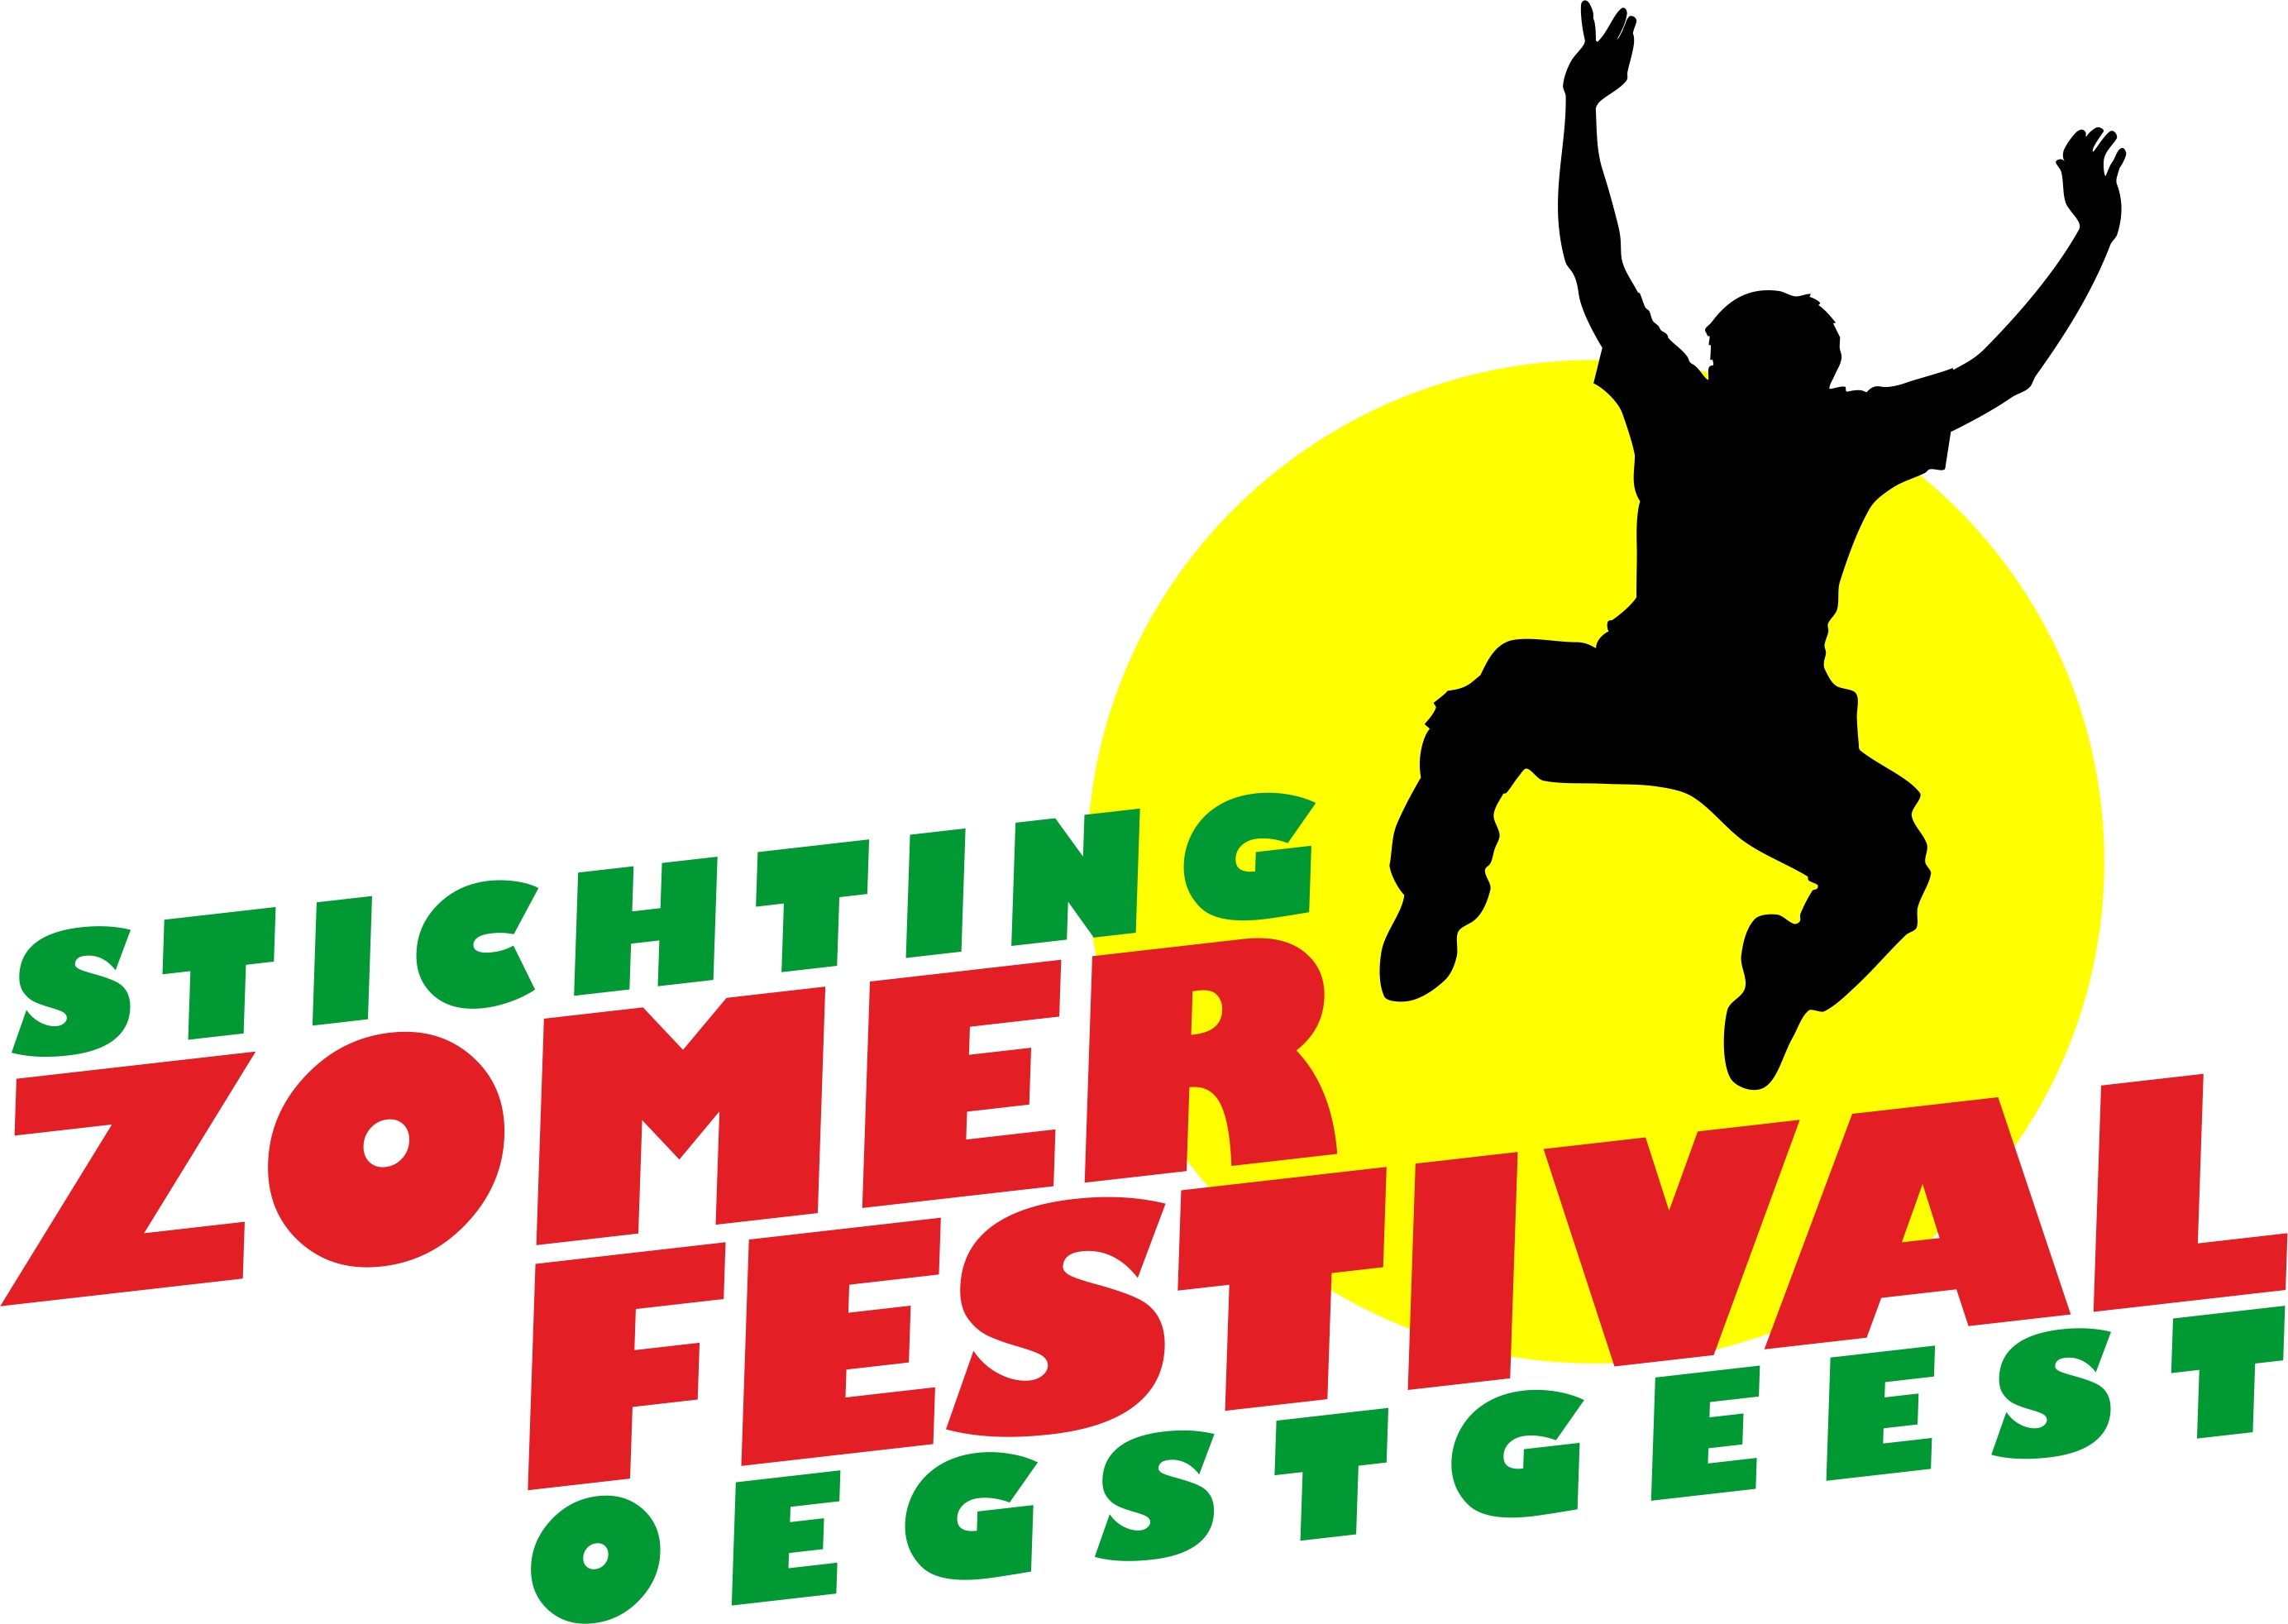 Nieuwe partner: Stichting Zomerfestival Oegstgeest